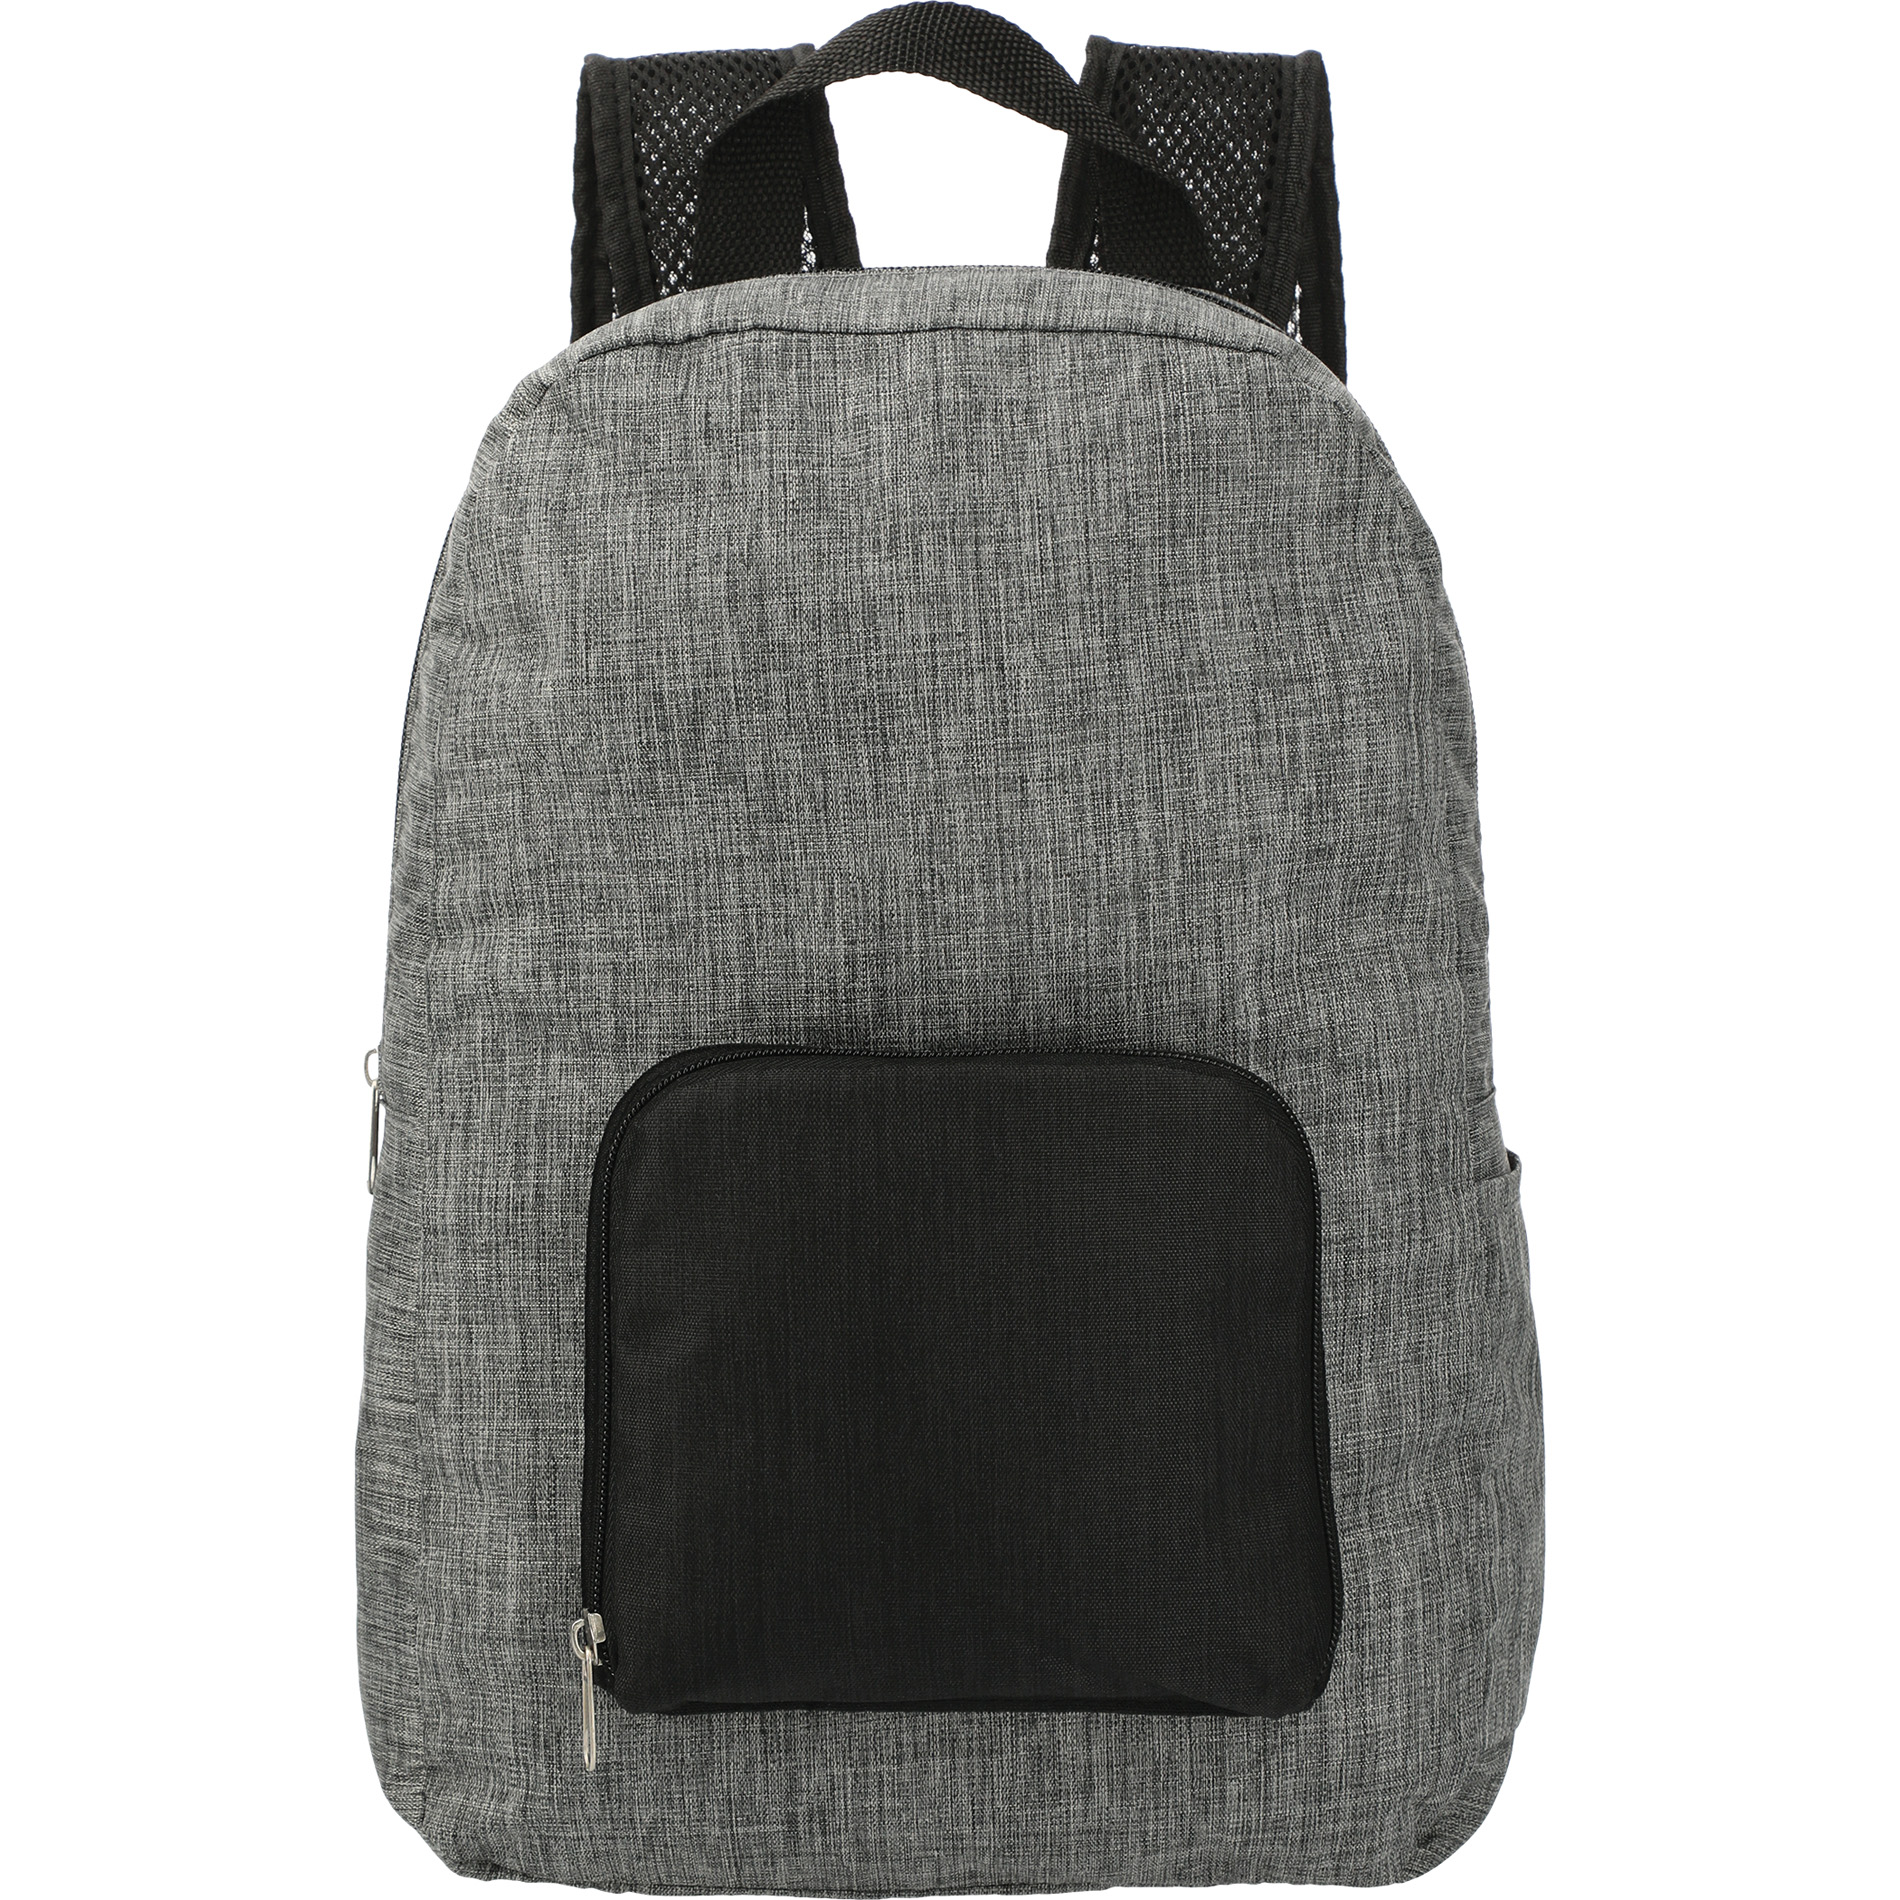 LEEDS SM-5902 - Graphite Foldable Backpack